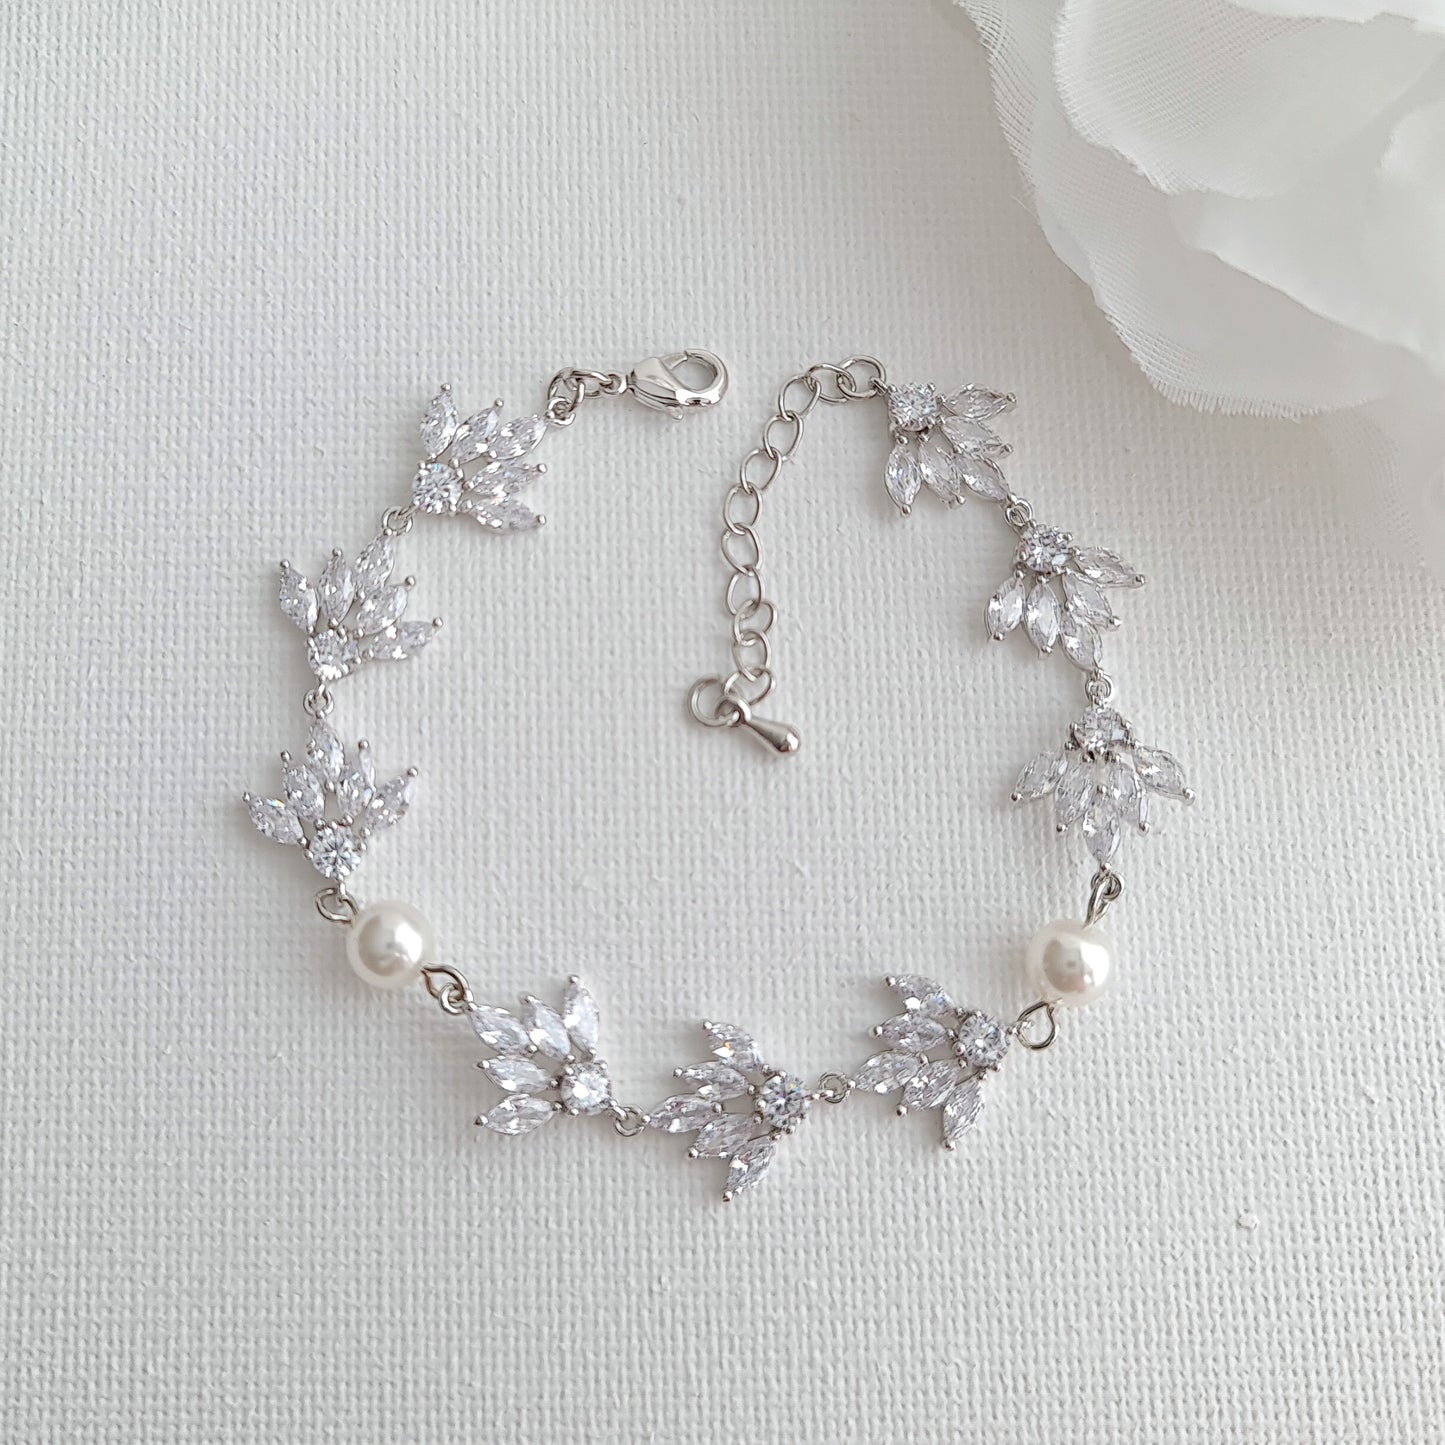 Bracelet de mariée en argent avec oxyde de zirconium et perles-Rosa